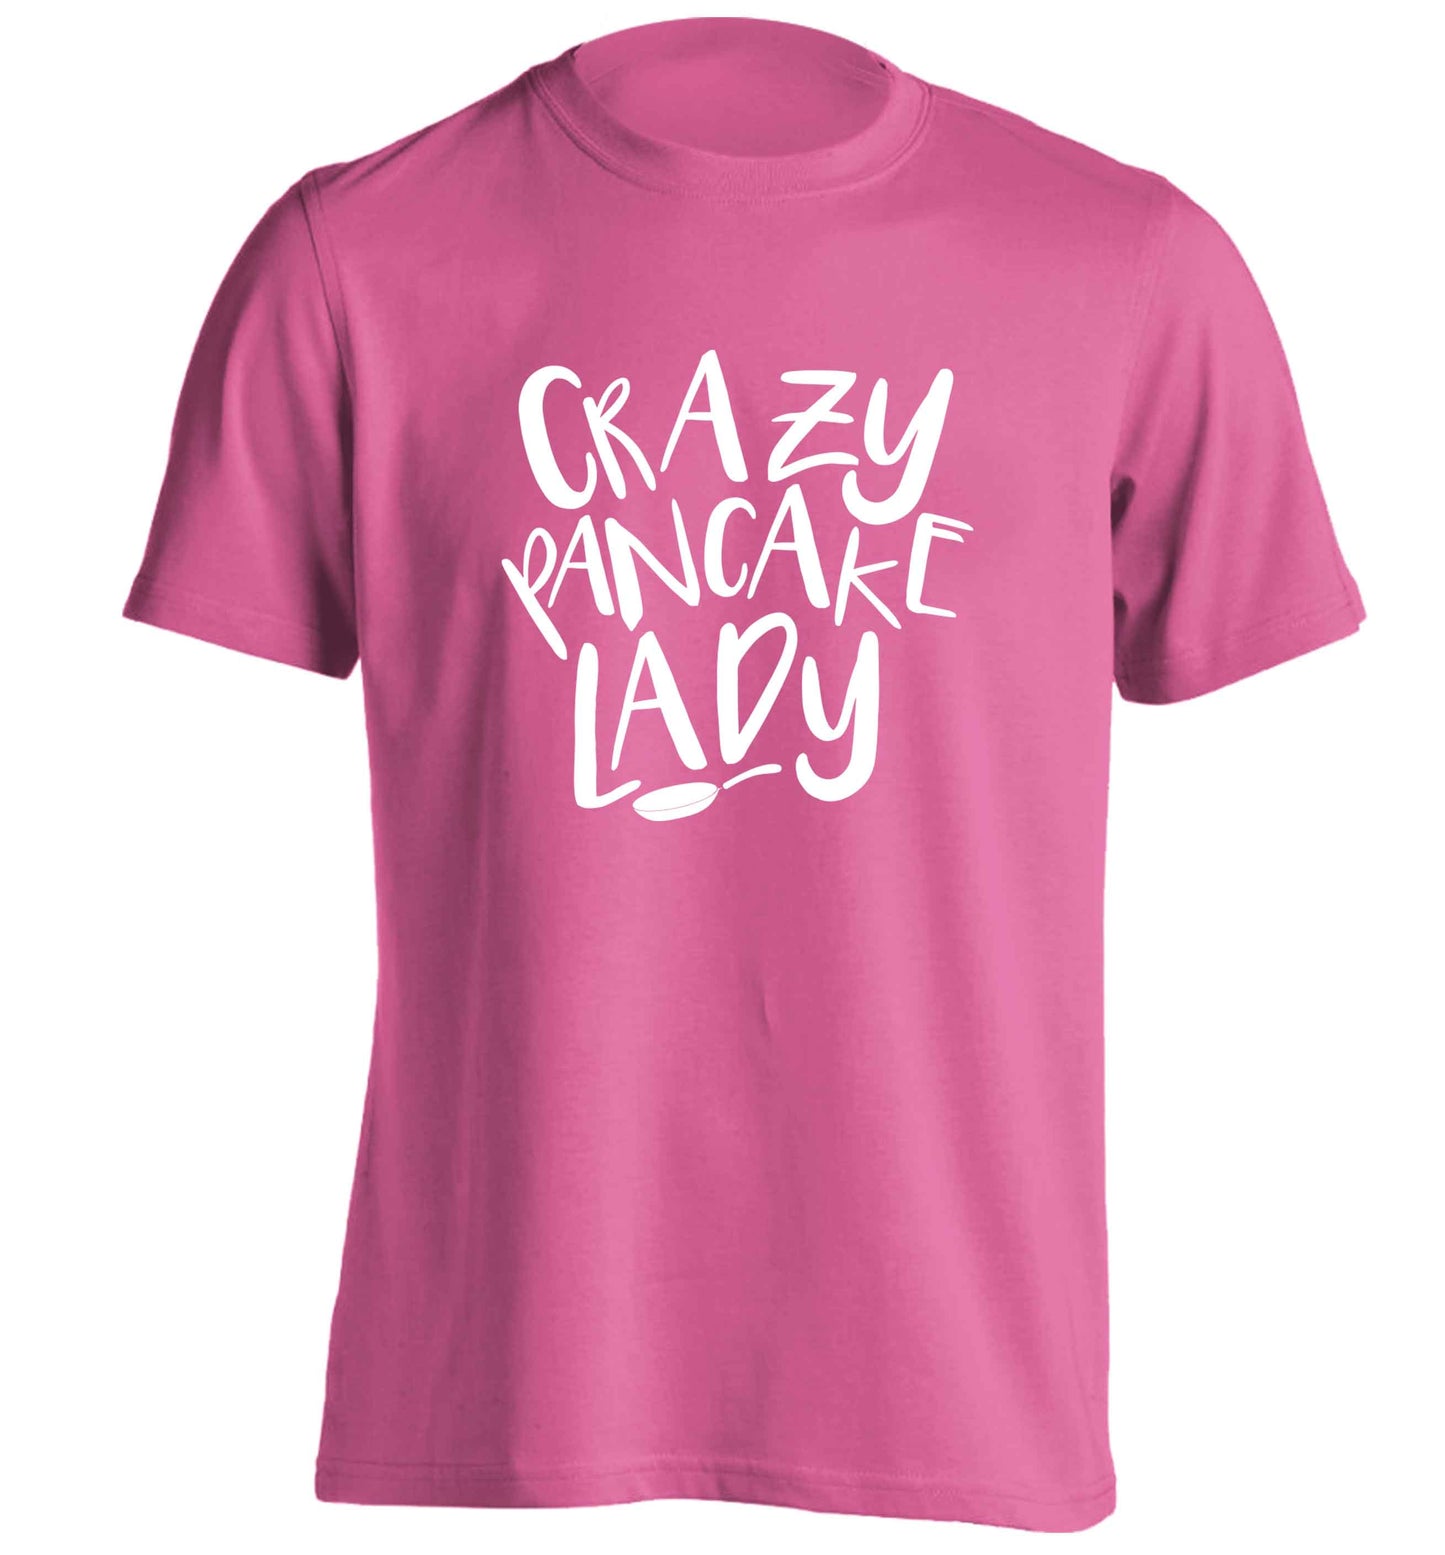 Crazy pancake lady adults unisex pink Tshirt 2XL